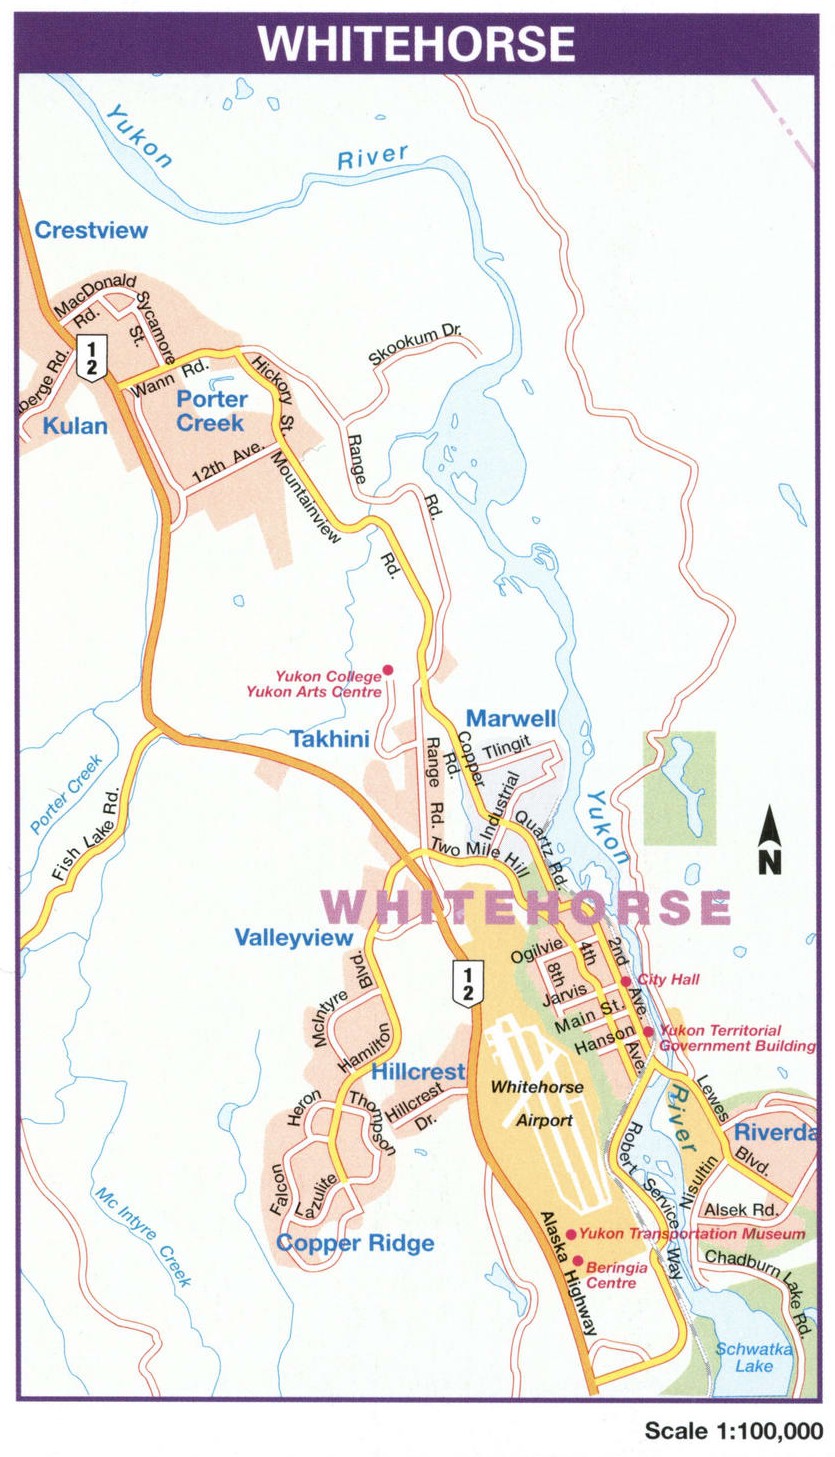 Whitehorse city map